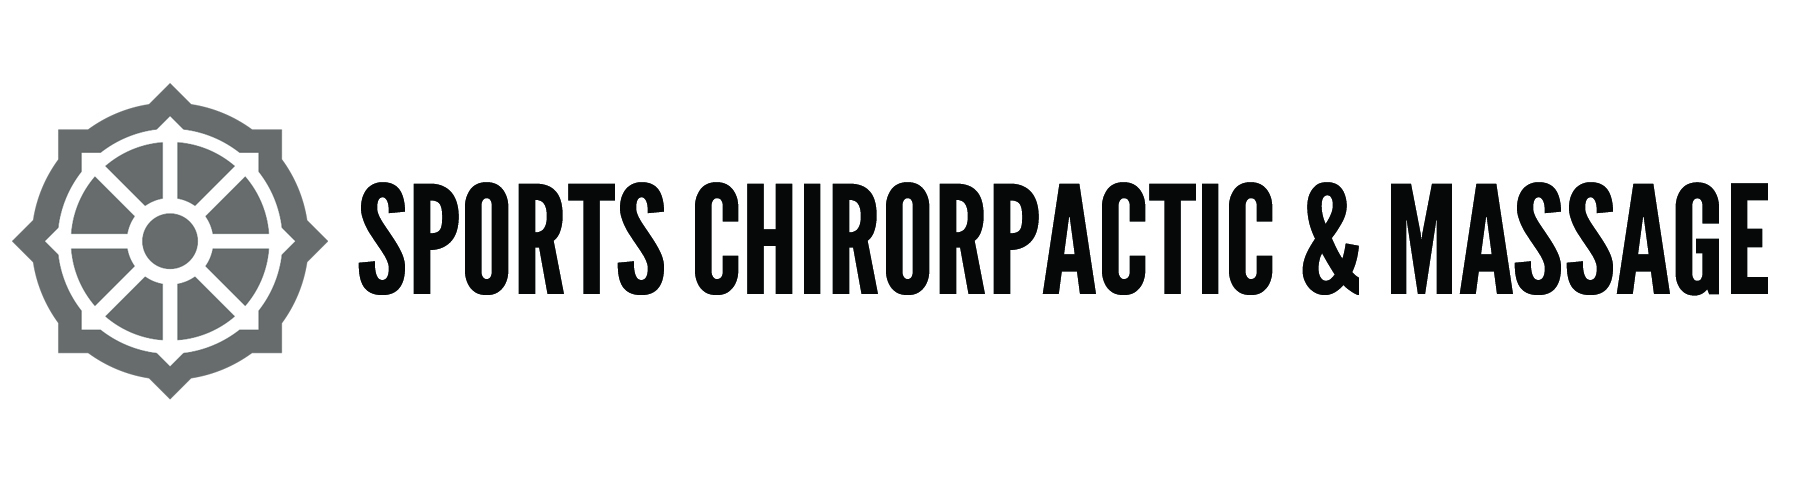 Sports Chiropractic & Massage Albuquerque & Santa Fe